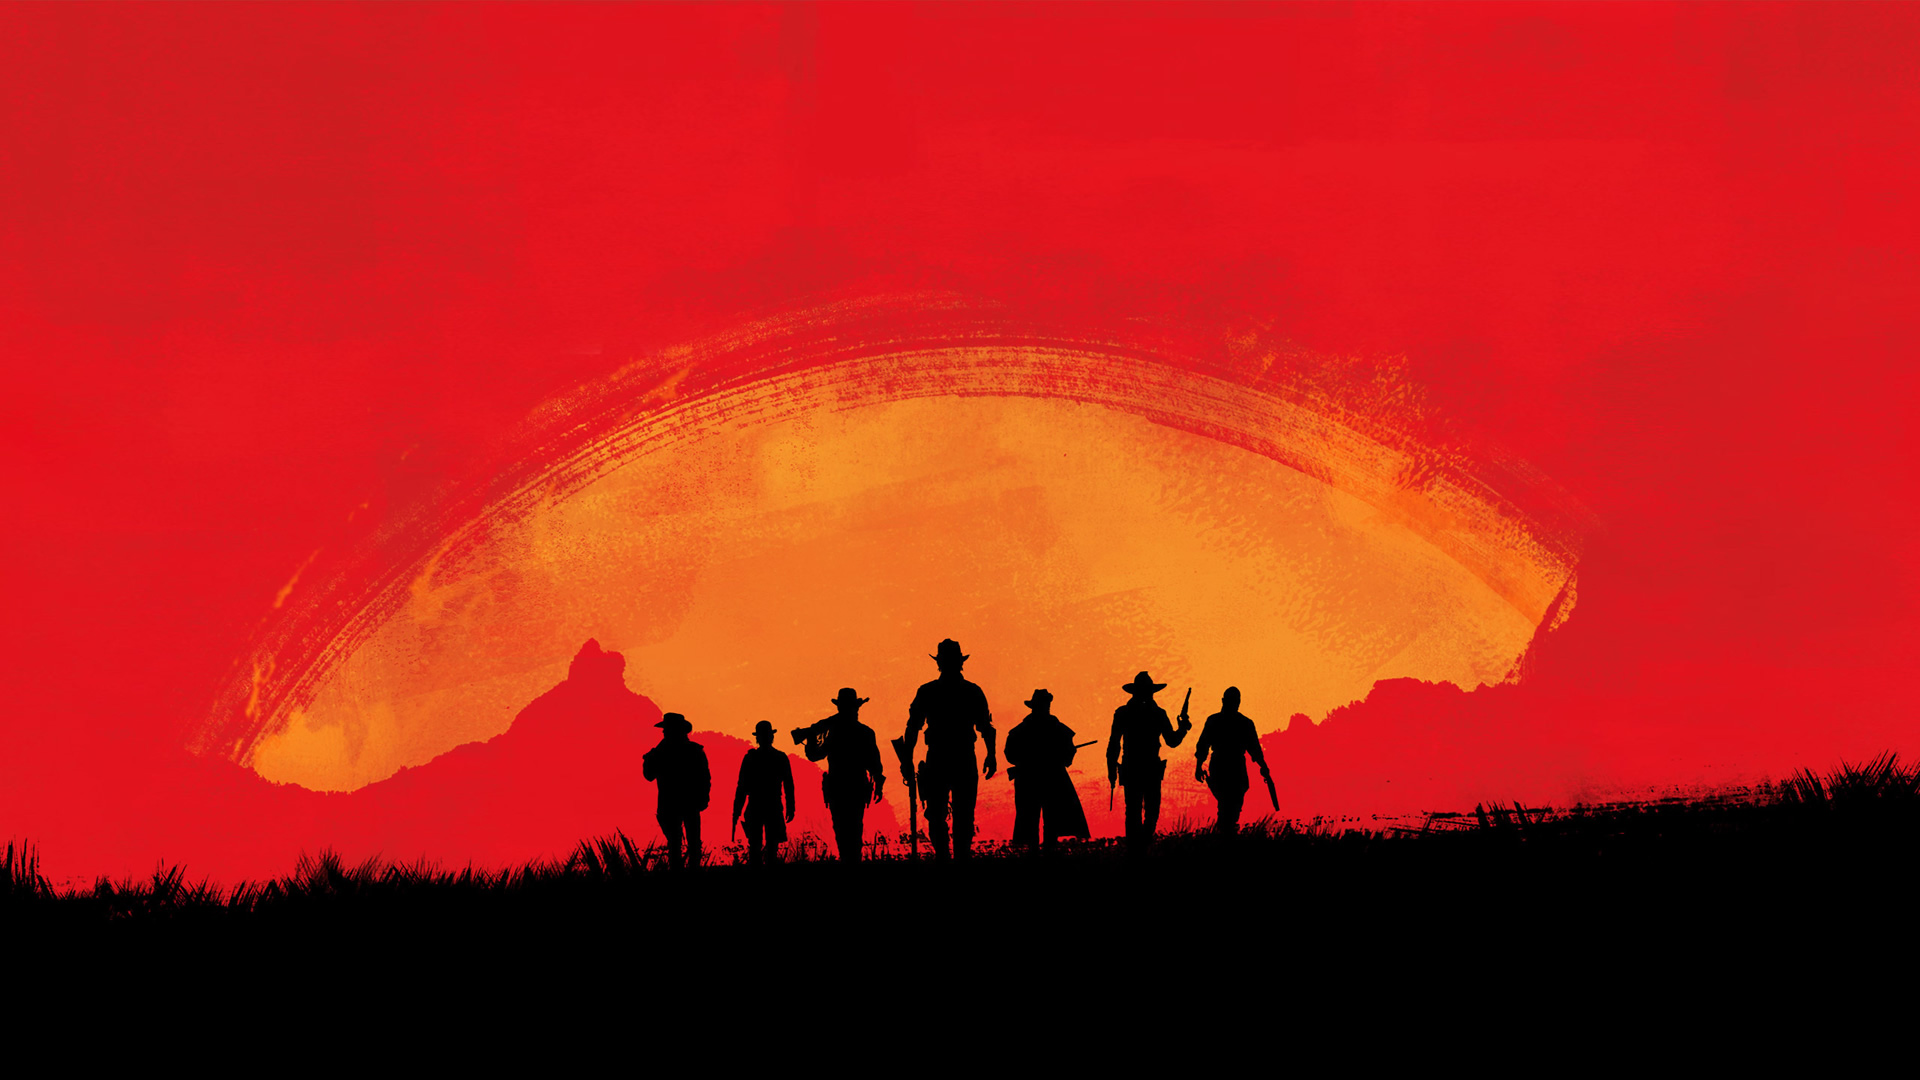 Red Dead Redemption II - Sunset Gang